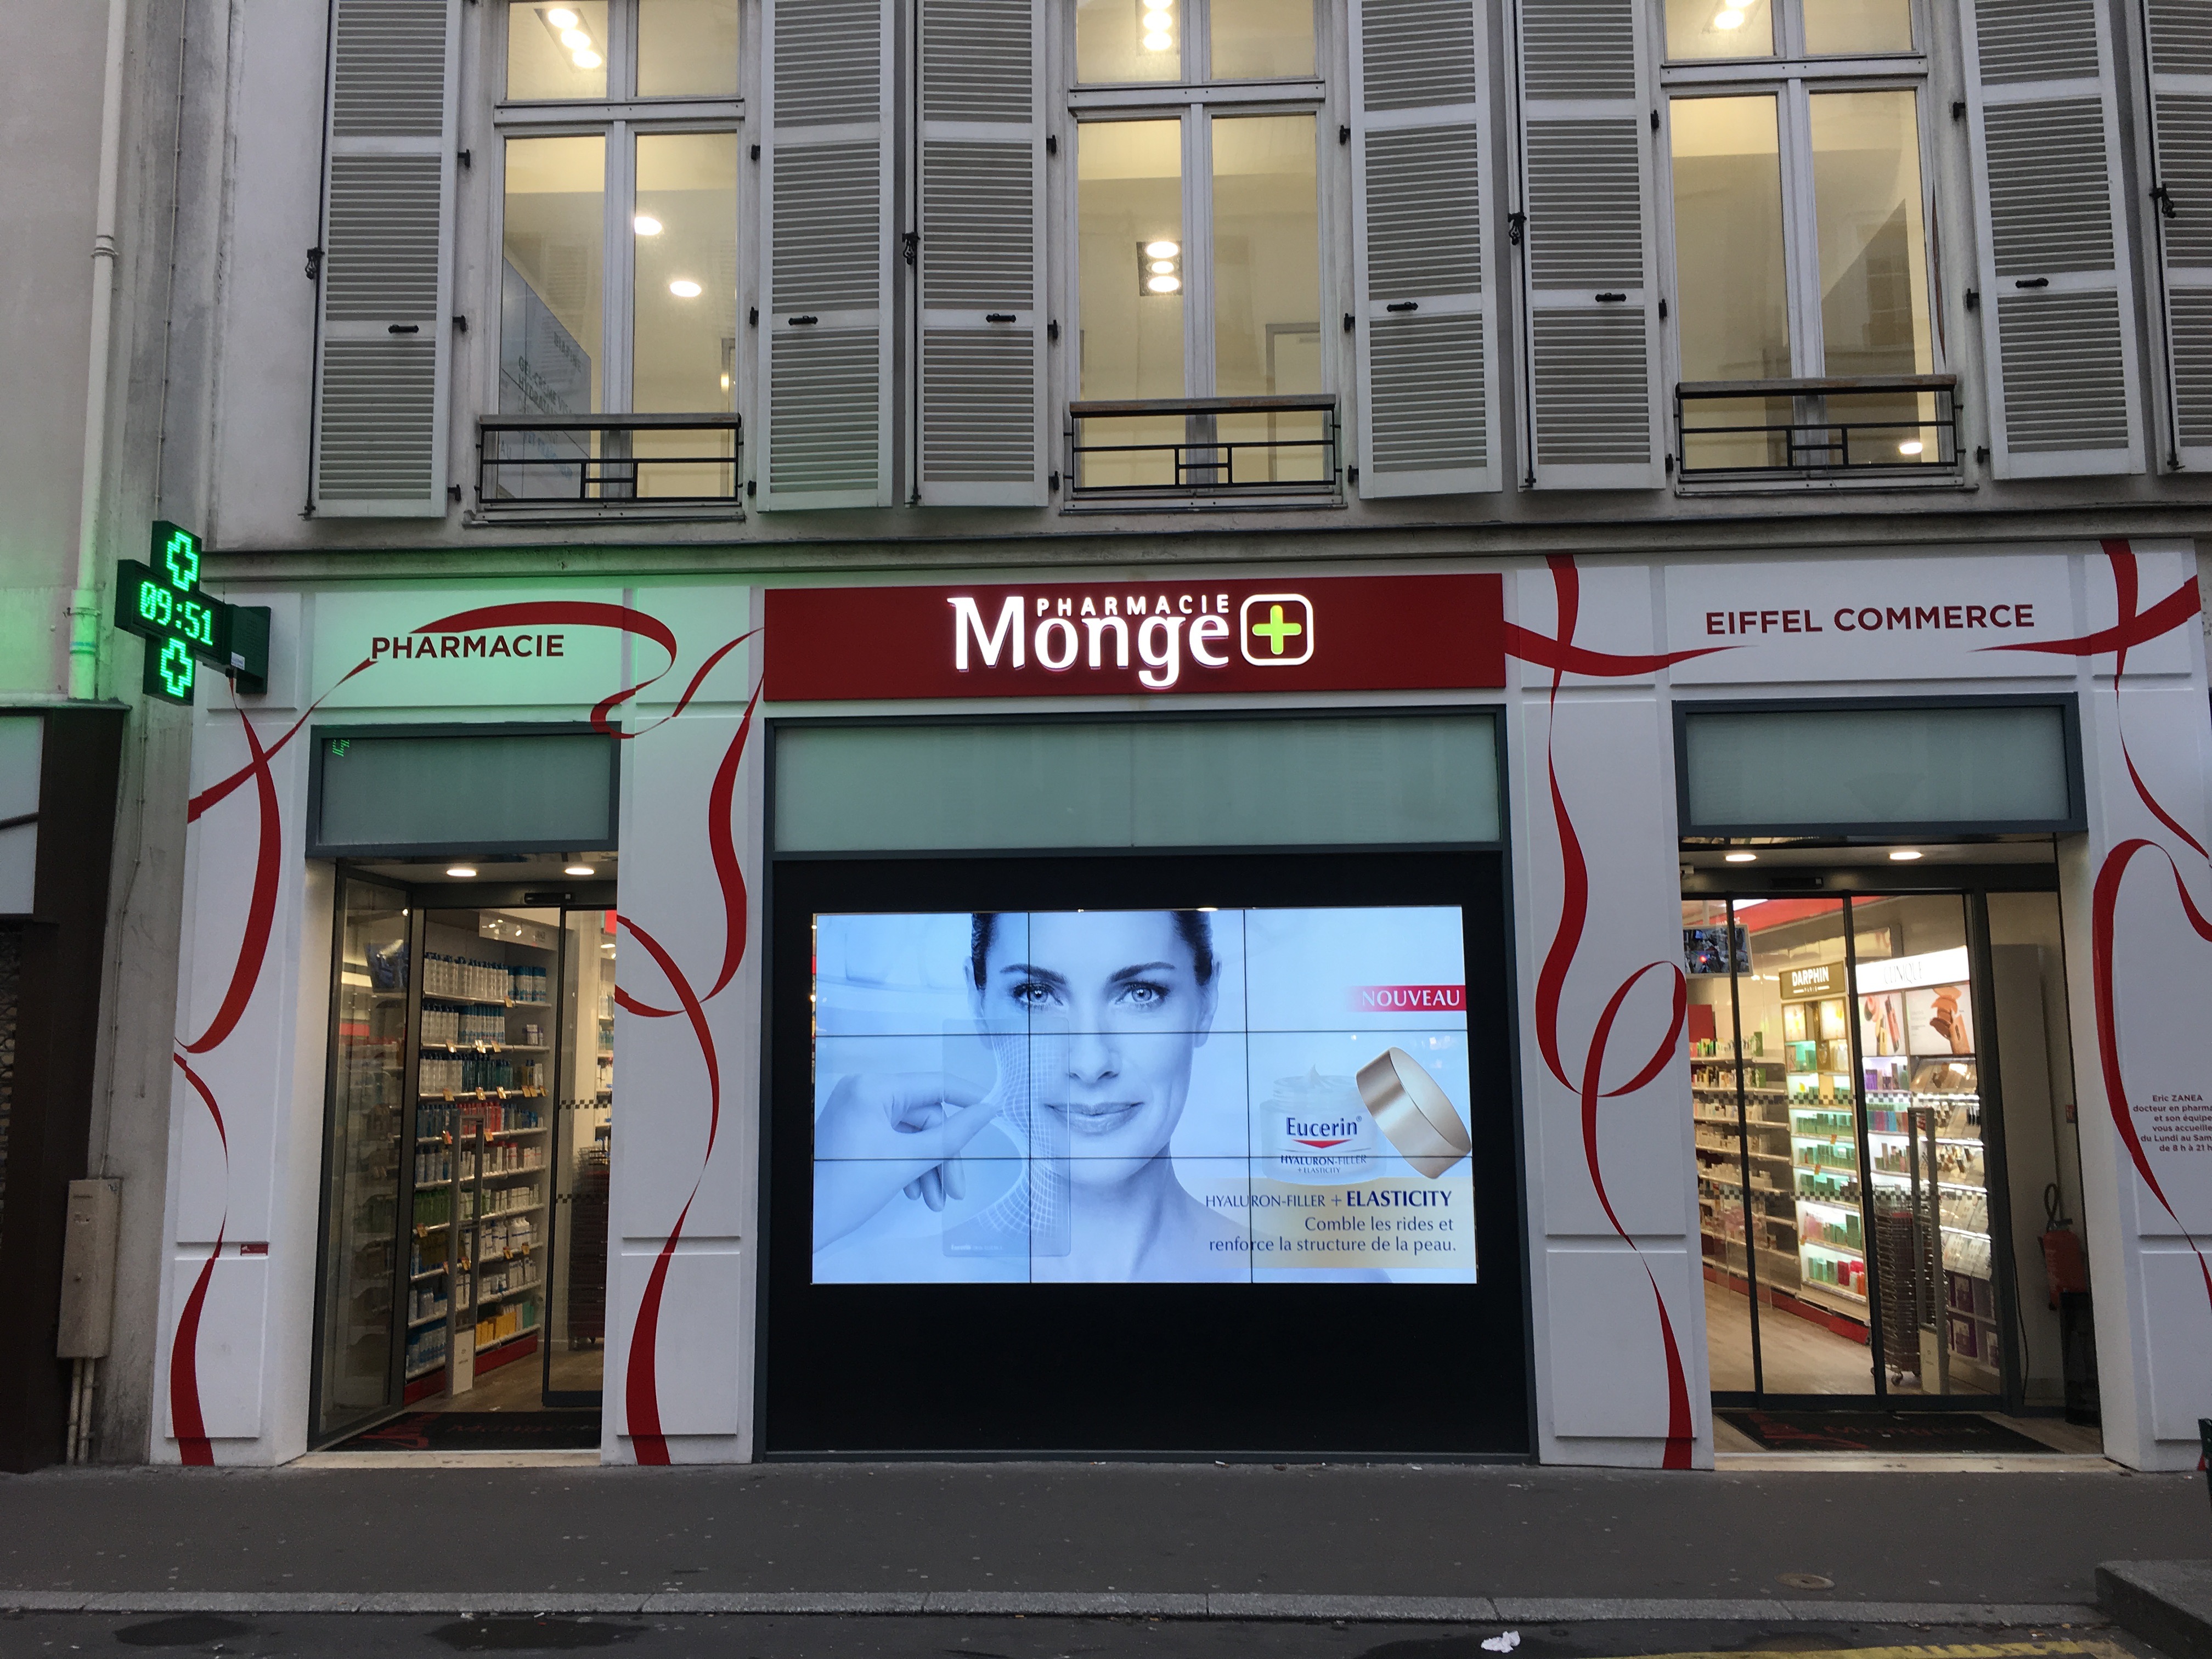 Pharmacie Monge